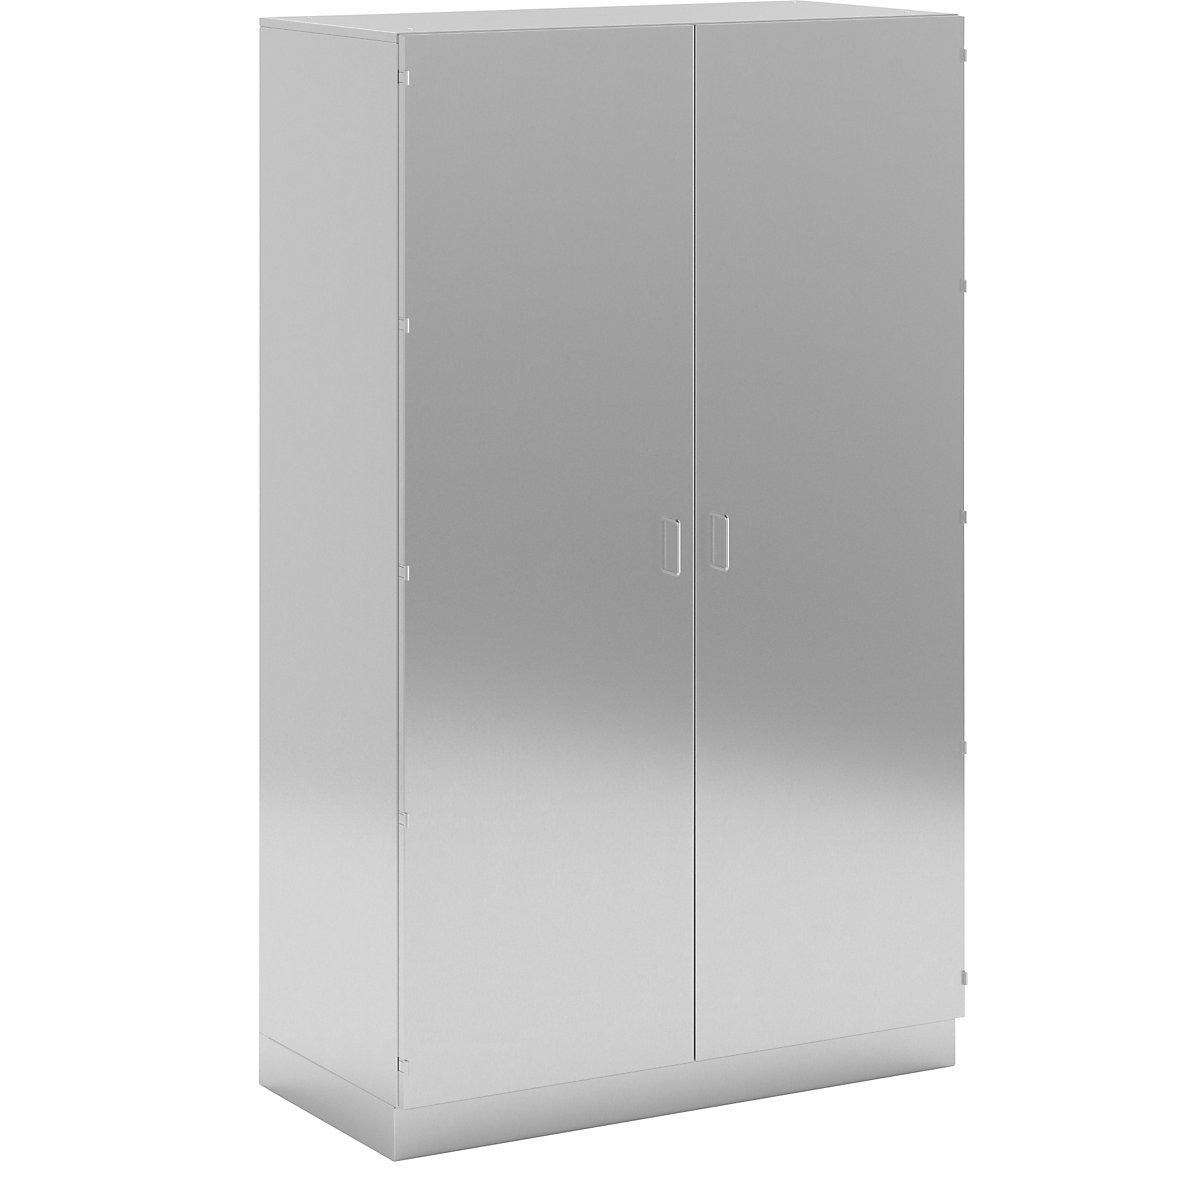 Cleanroom full height cupboard made of stainless steel, 2 hinged door, width 1200 mm-8